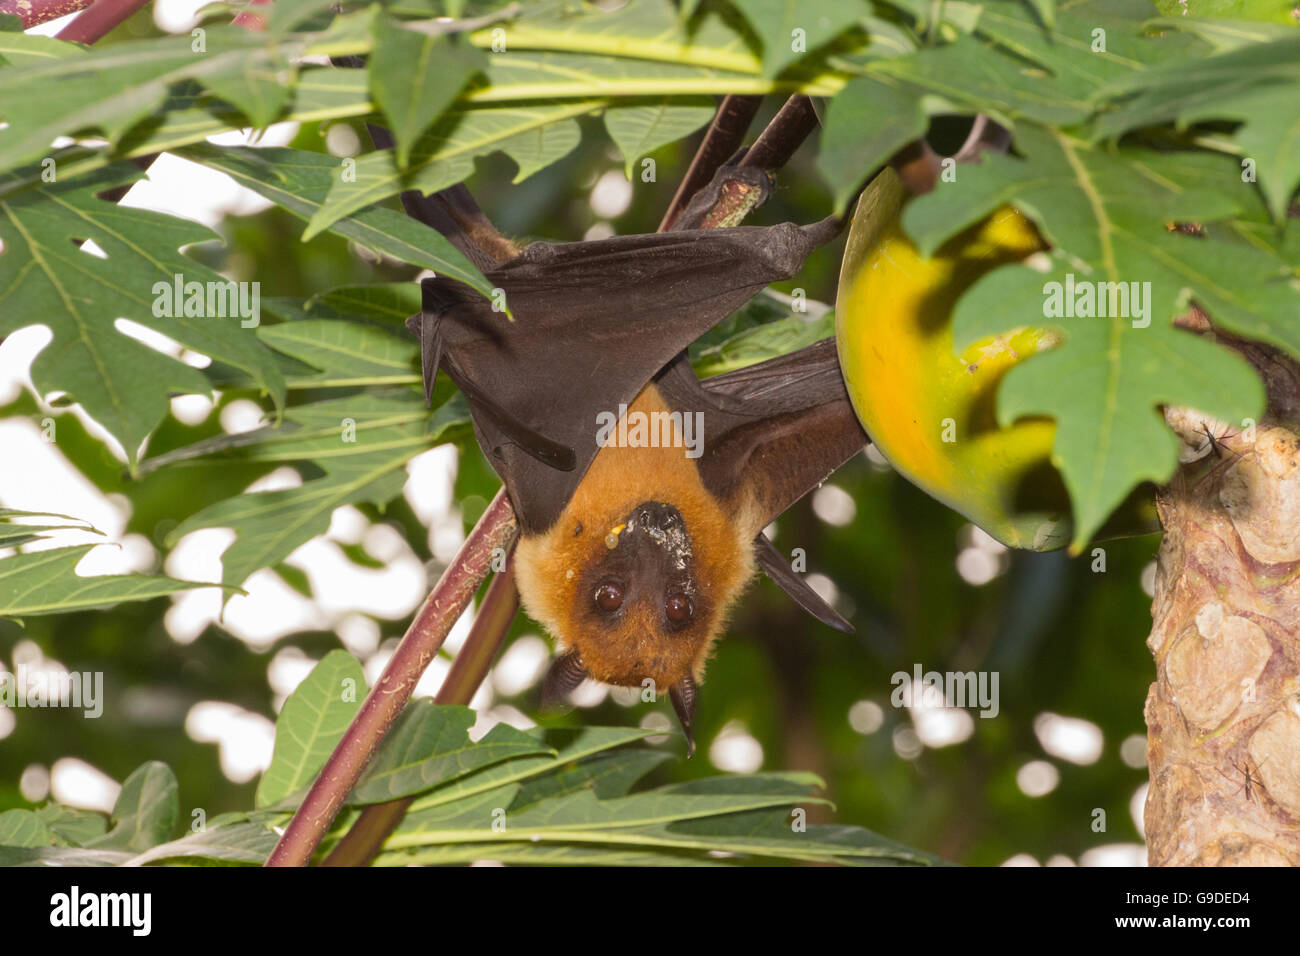 Indian fruit bat Foto de stock